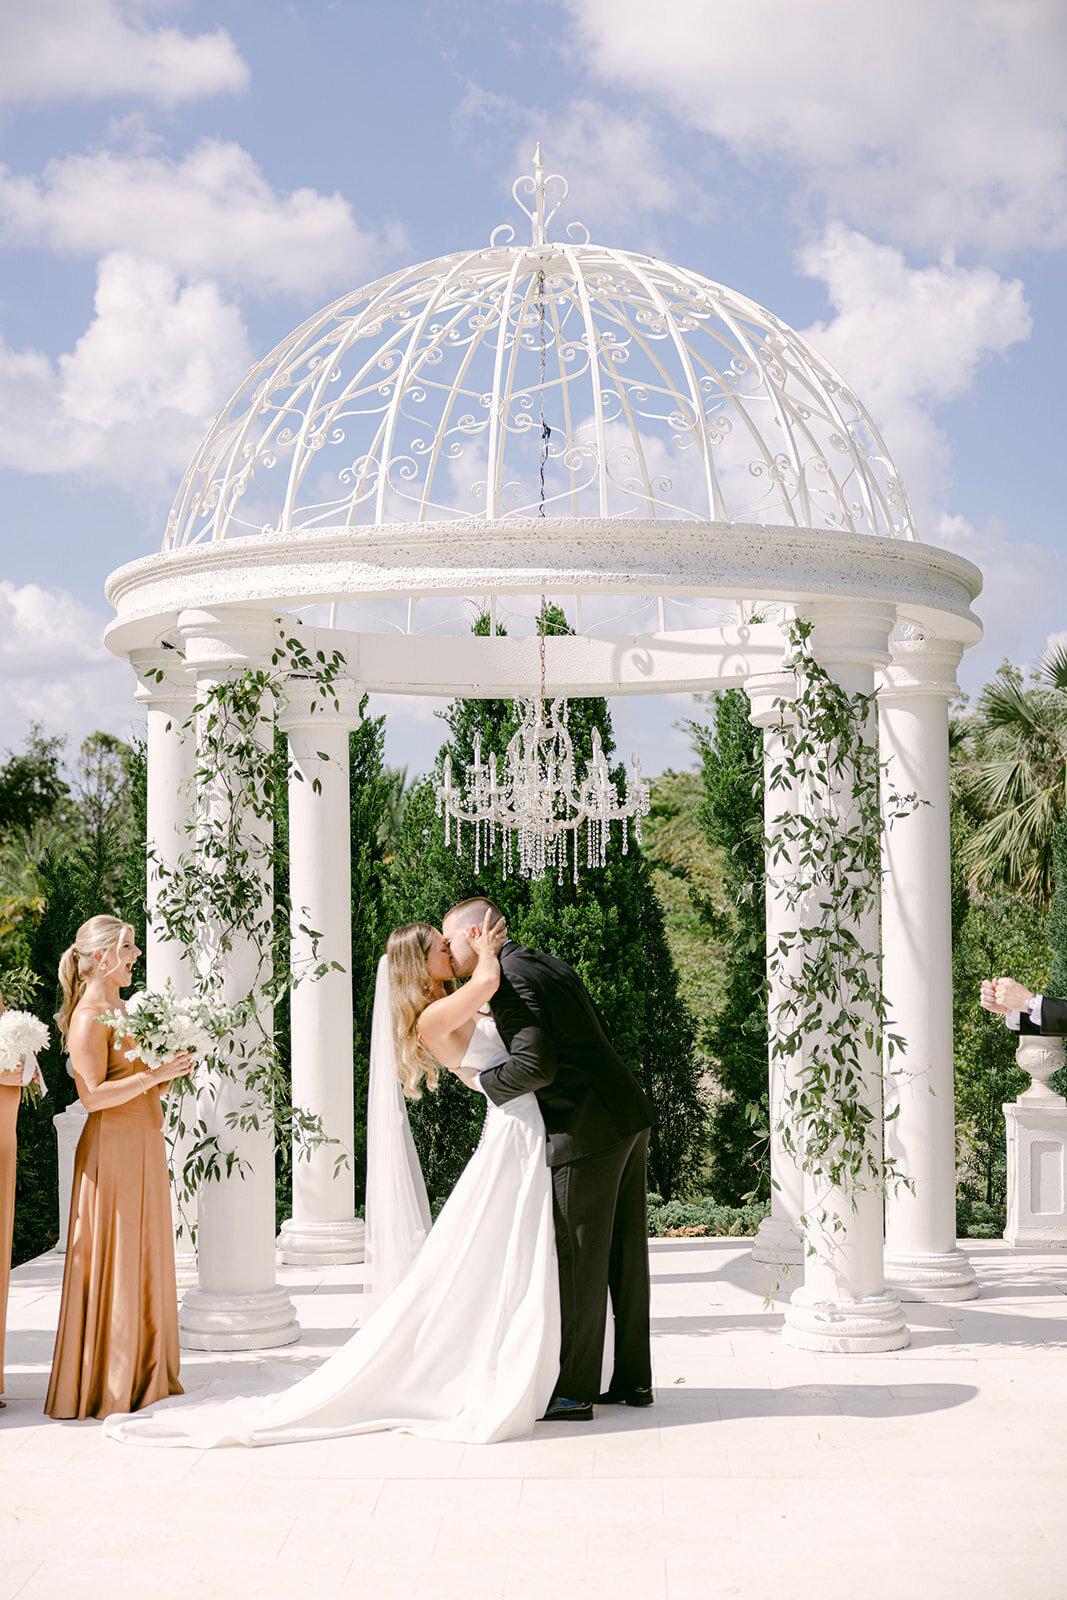 CORNELIA ZAISS PHOTOGRAPHY LEAH + ROBERT'S WEDDING 0719_websize